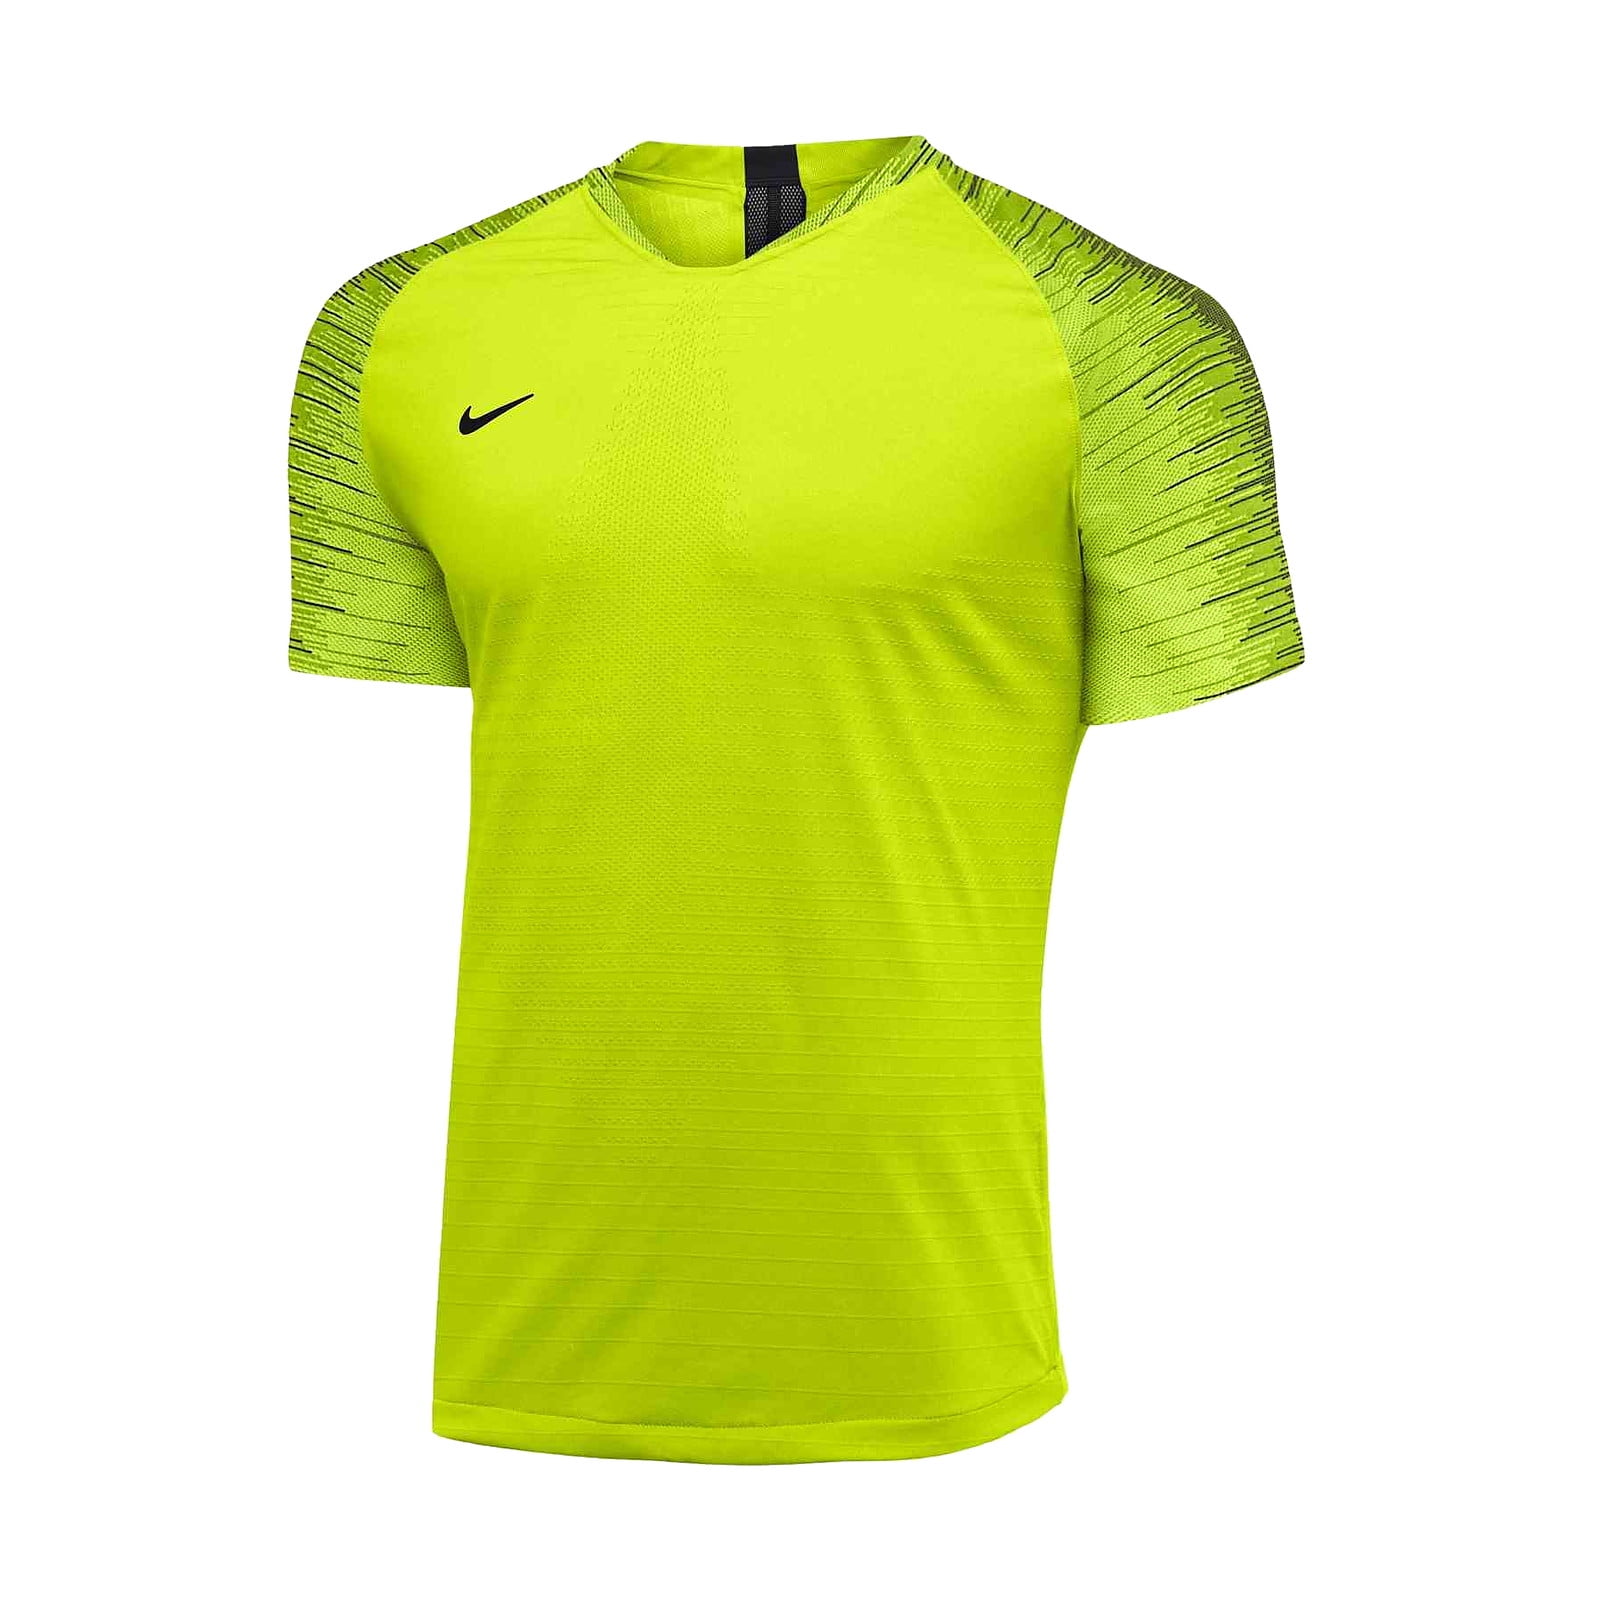 Nike Team Vaporknit II 2 Soccer Quick Dry Jersey (Small, Volt) - Walmart.com